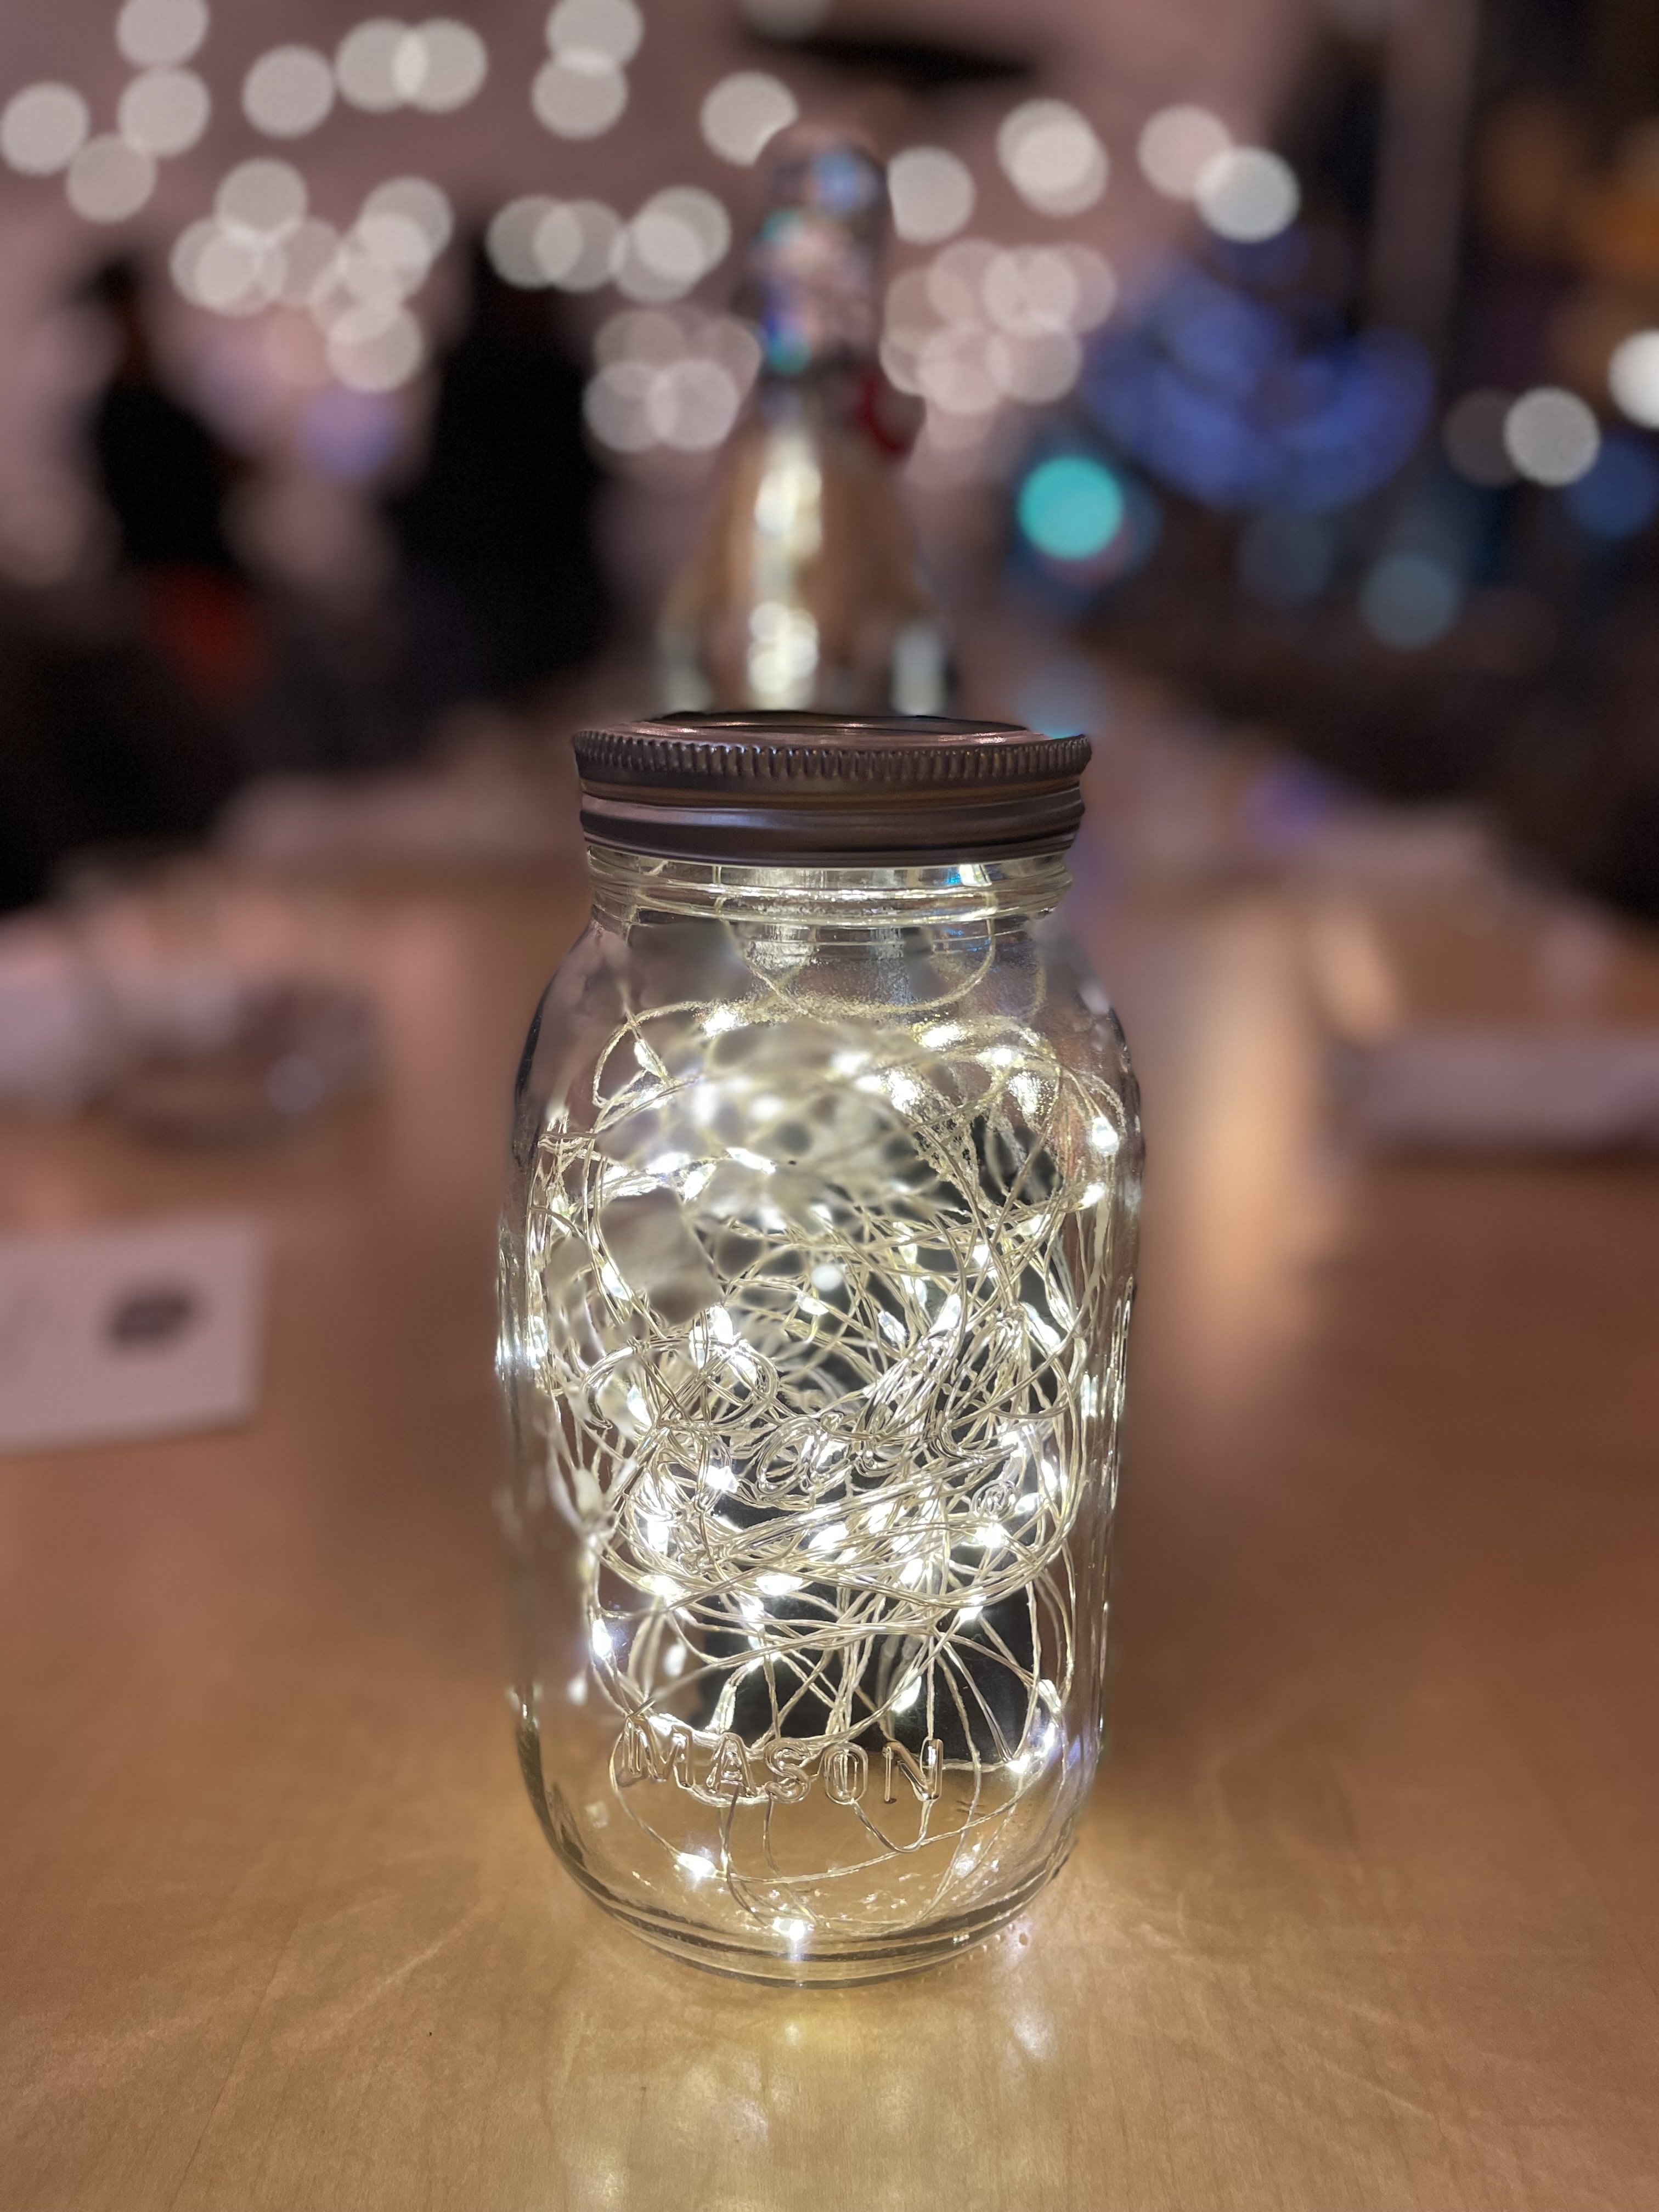 Panjnani designed mason jar centerpieces for Harris' book launch party.